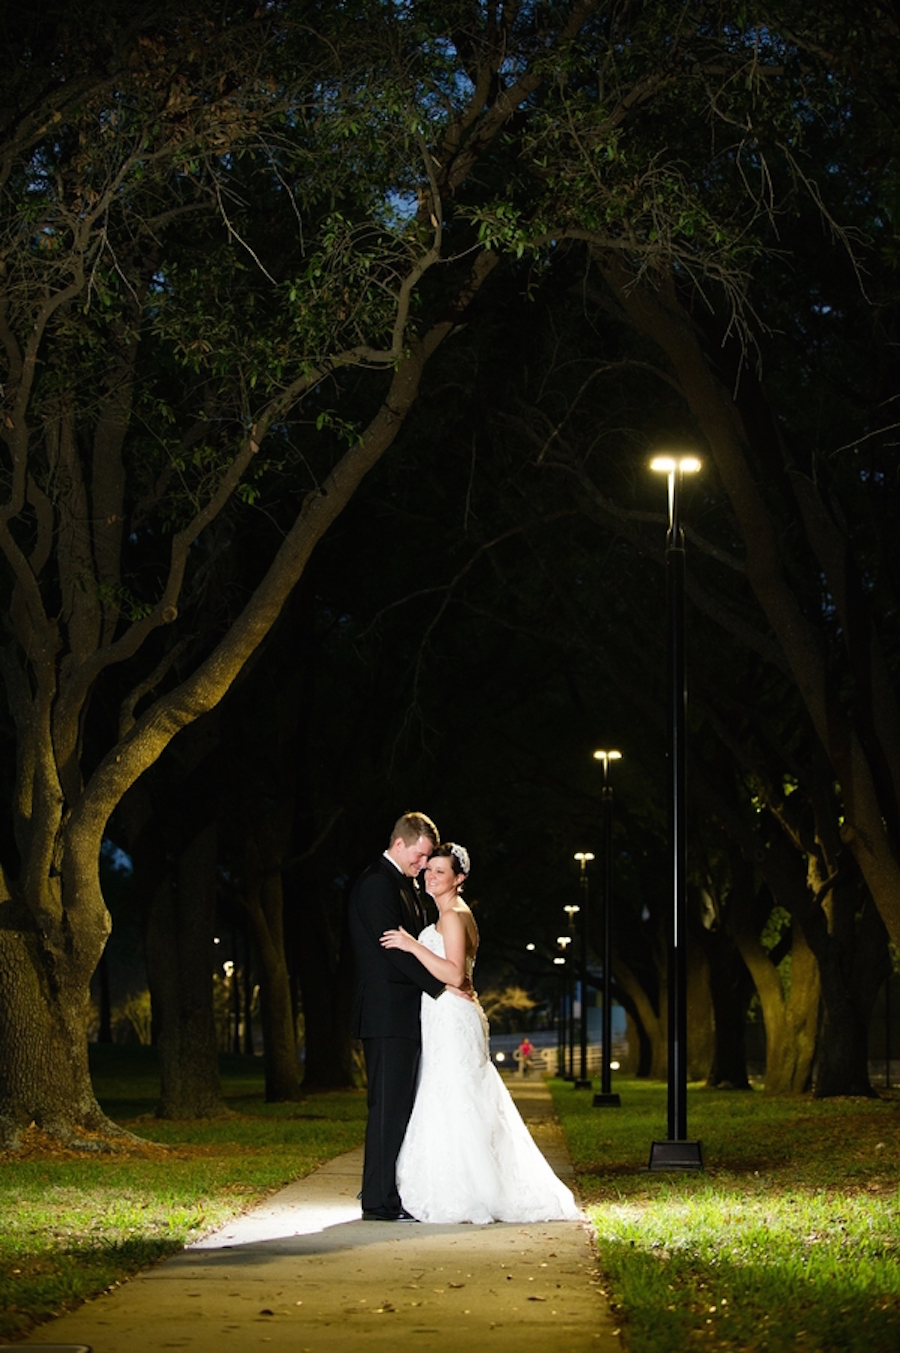 Outdoor, Nighttime Bride and Groom Wedding Portrait | Tampa Wedding Photographer Andi Diamond Photography